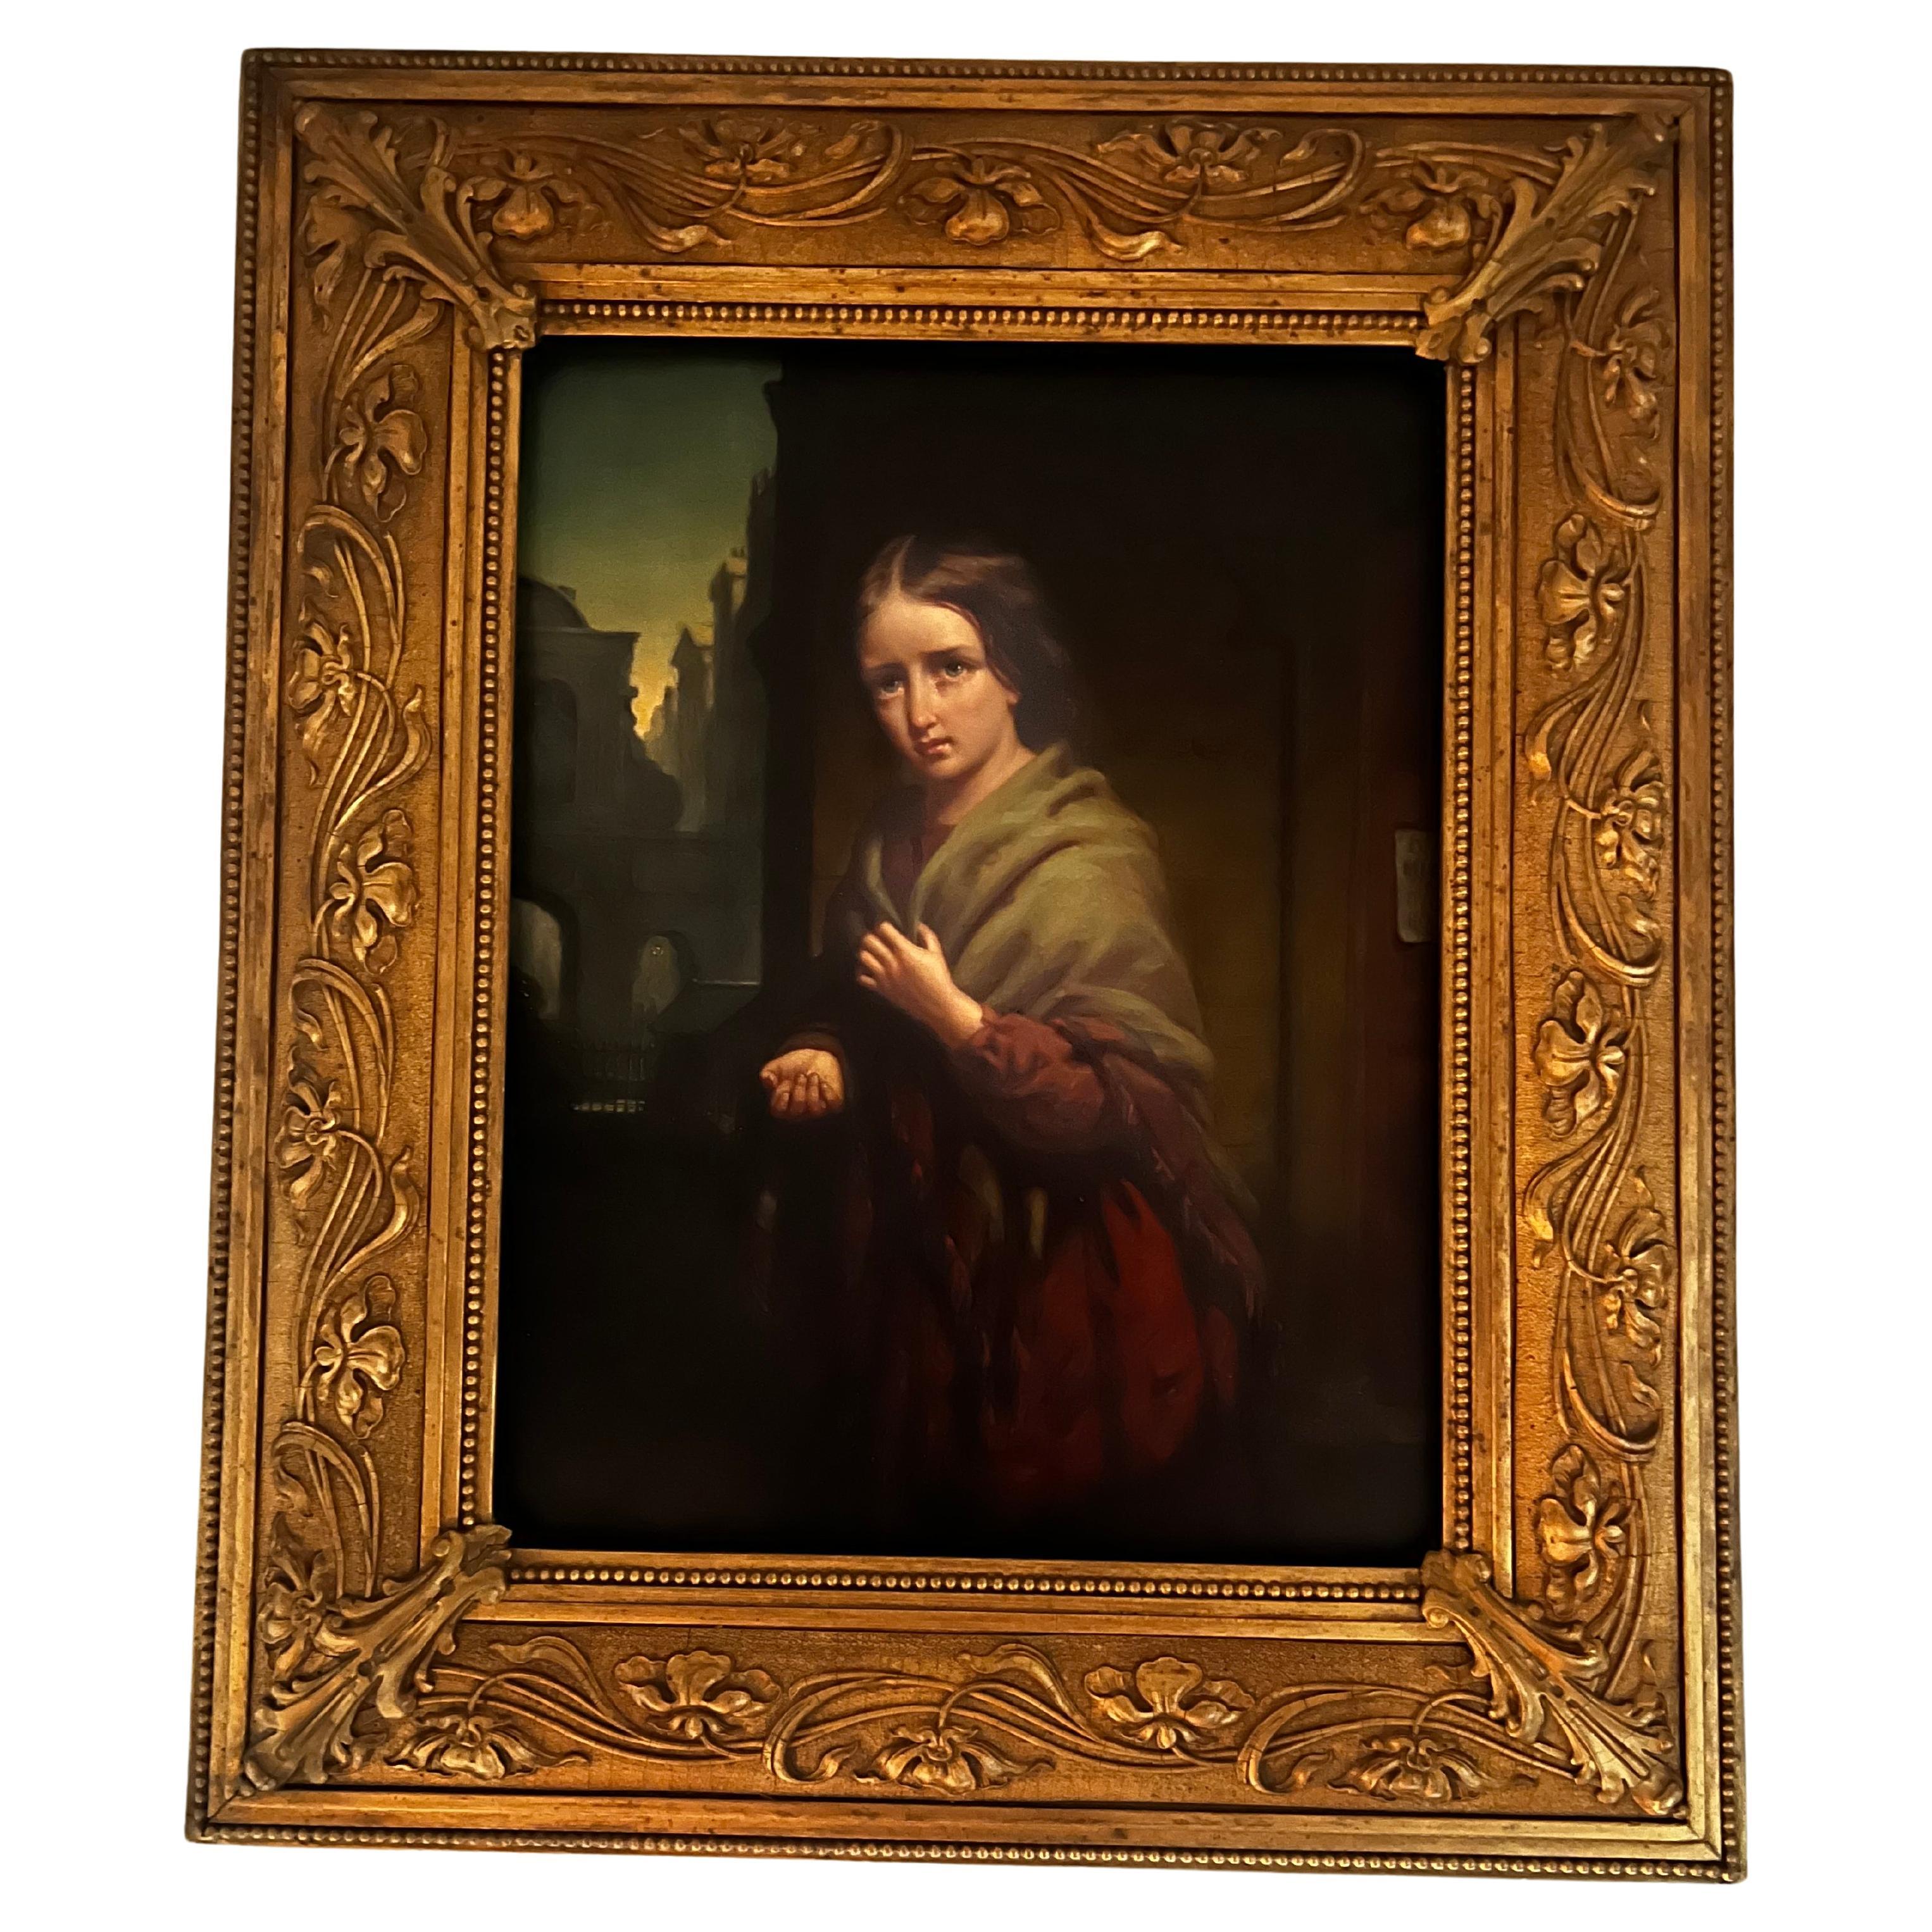 Philip H. Calderon “Poor girl begging for handouts” Oil on Canvas London 1860